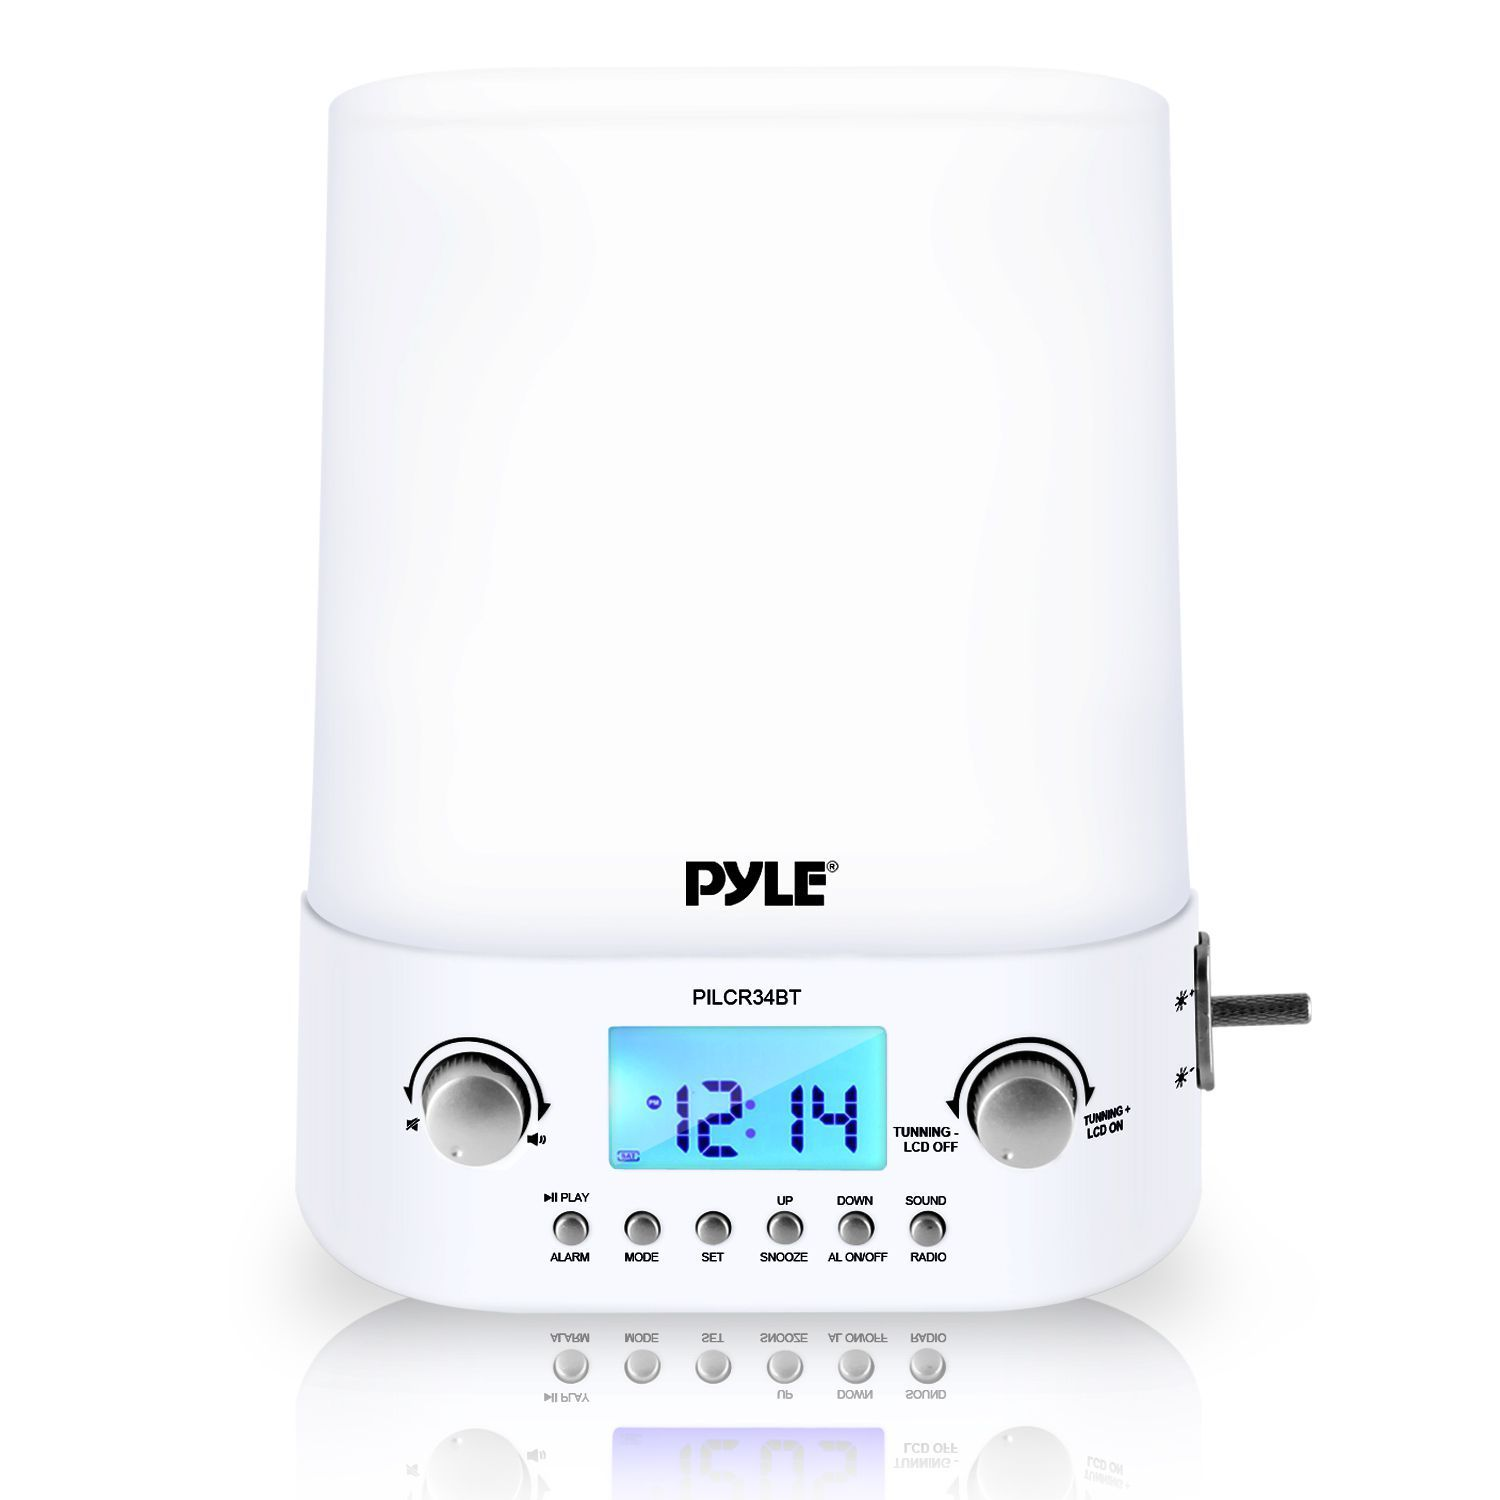 Pyle Compact Bluetooth Tabletop Alarm Clock, Stereo Speakers, LED Night Light, FM Radio, (PILCR34BT)